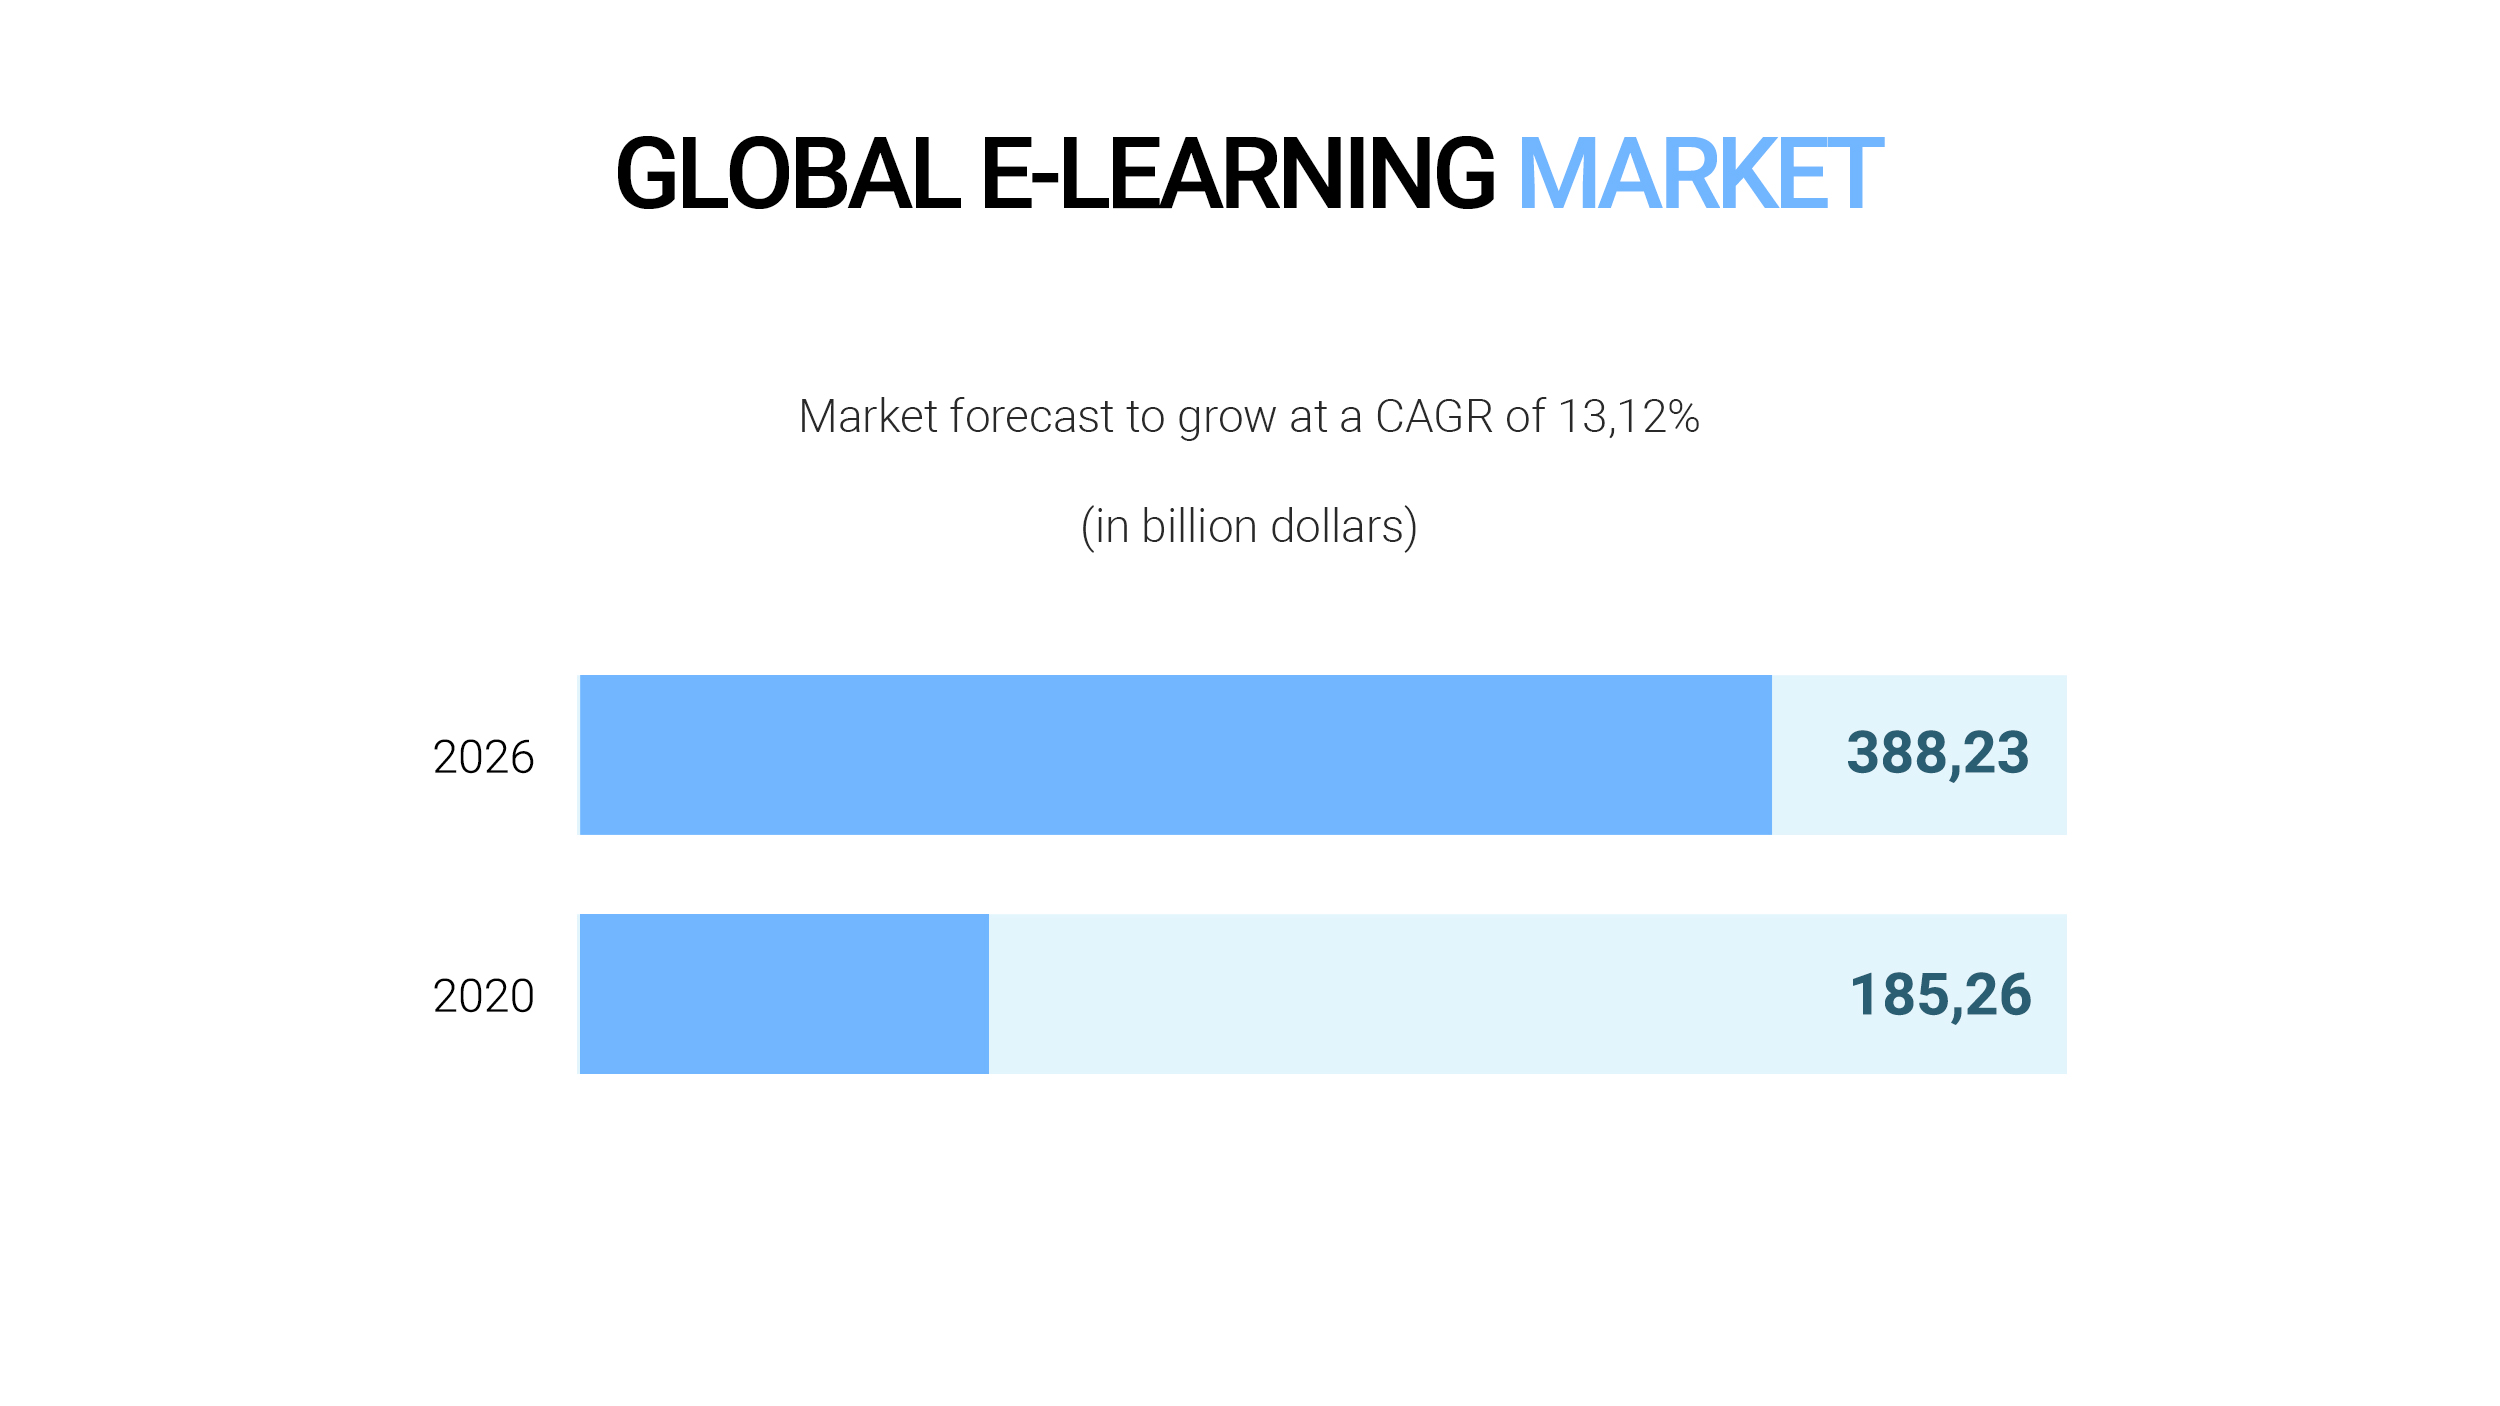 Global e-learning market forecast